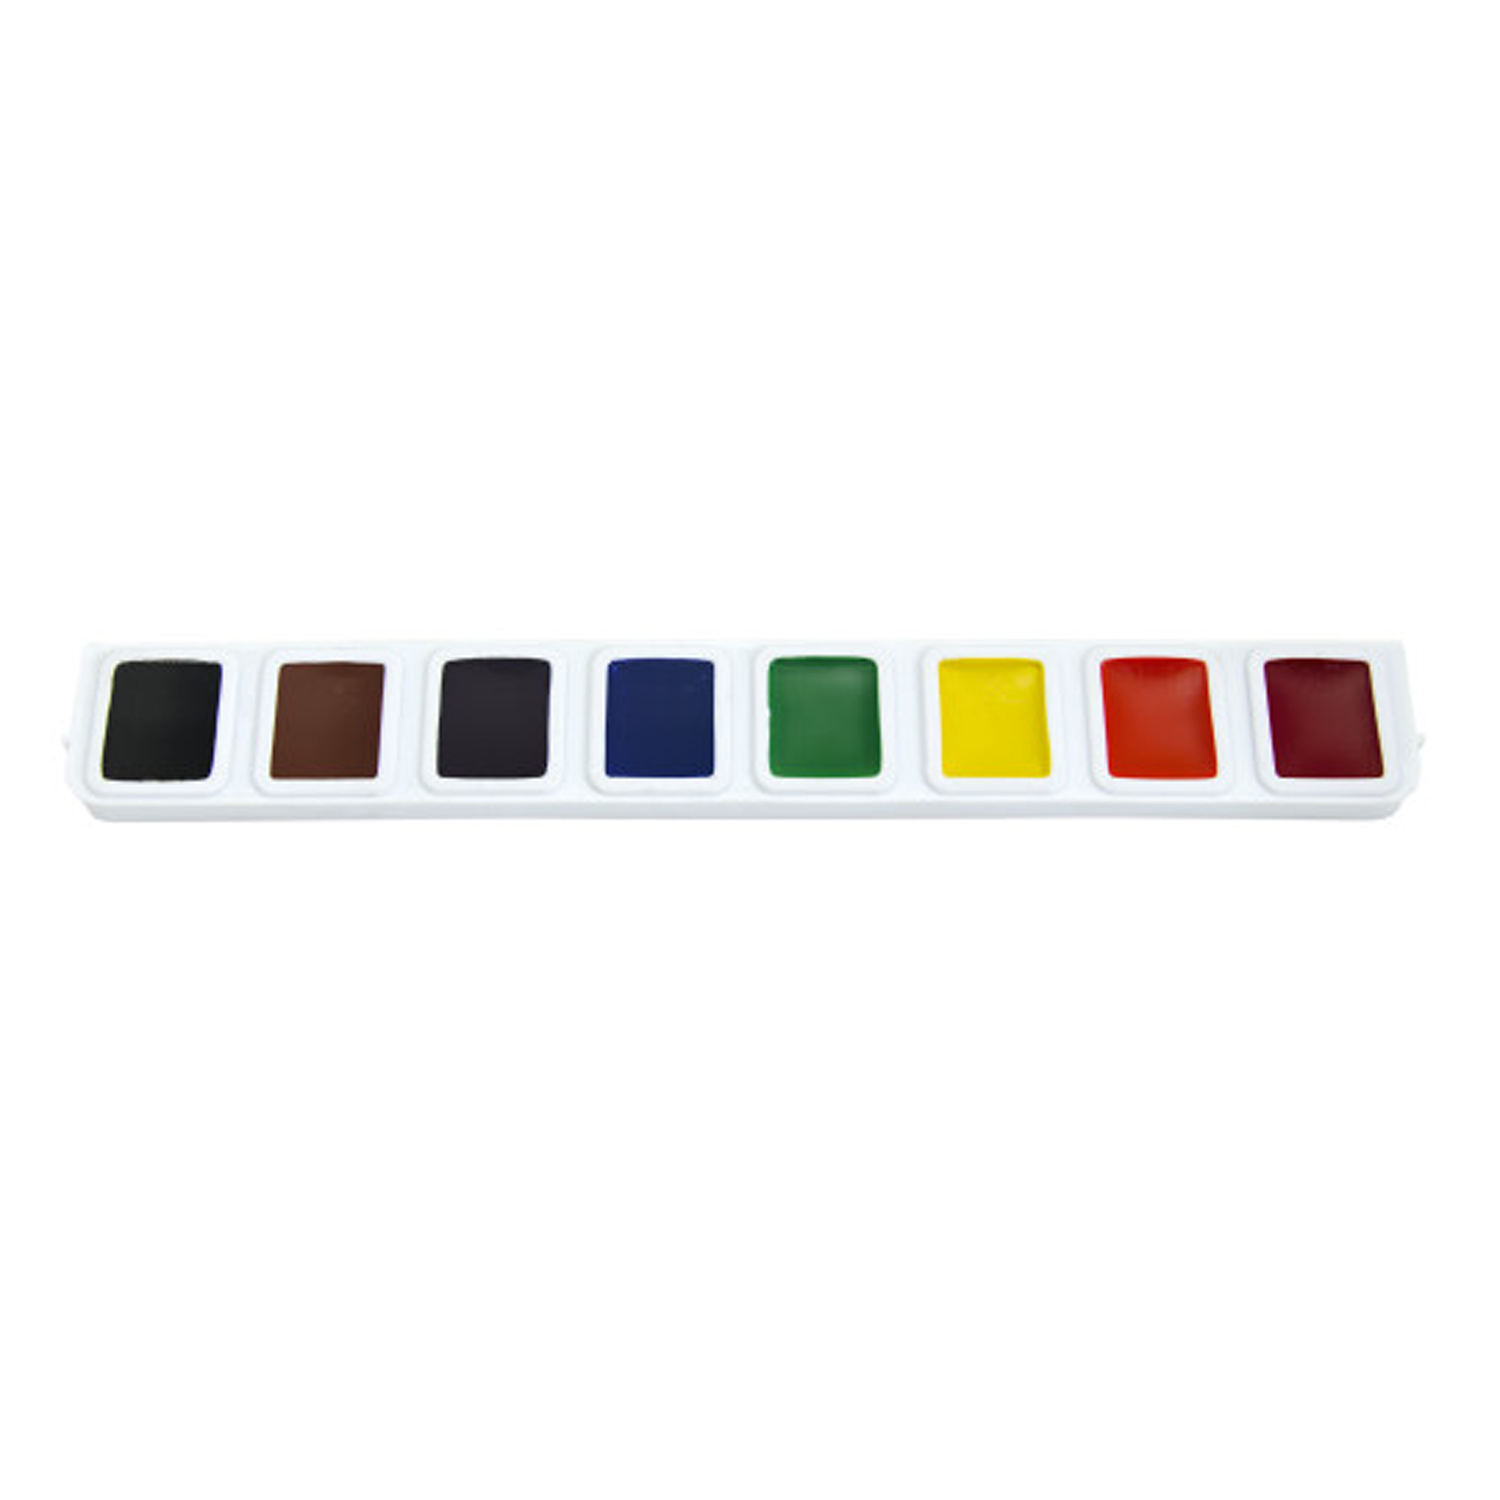 Half Pan Watercolor Refill Tray, 8 Colors, 3 Trays